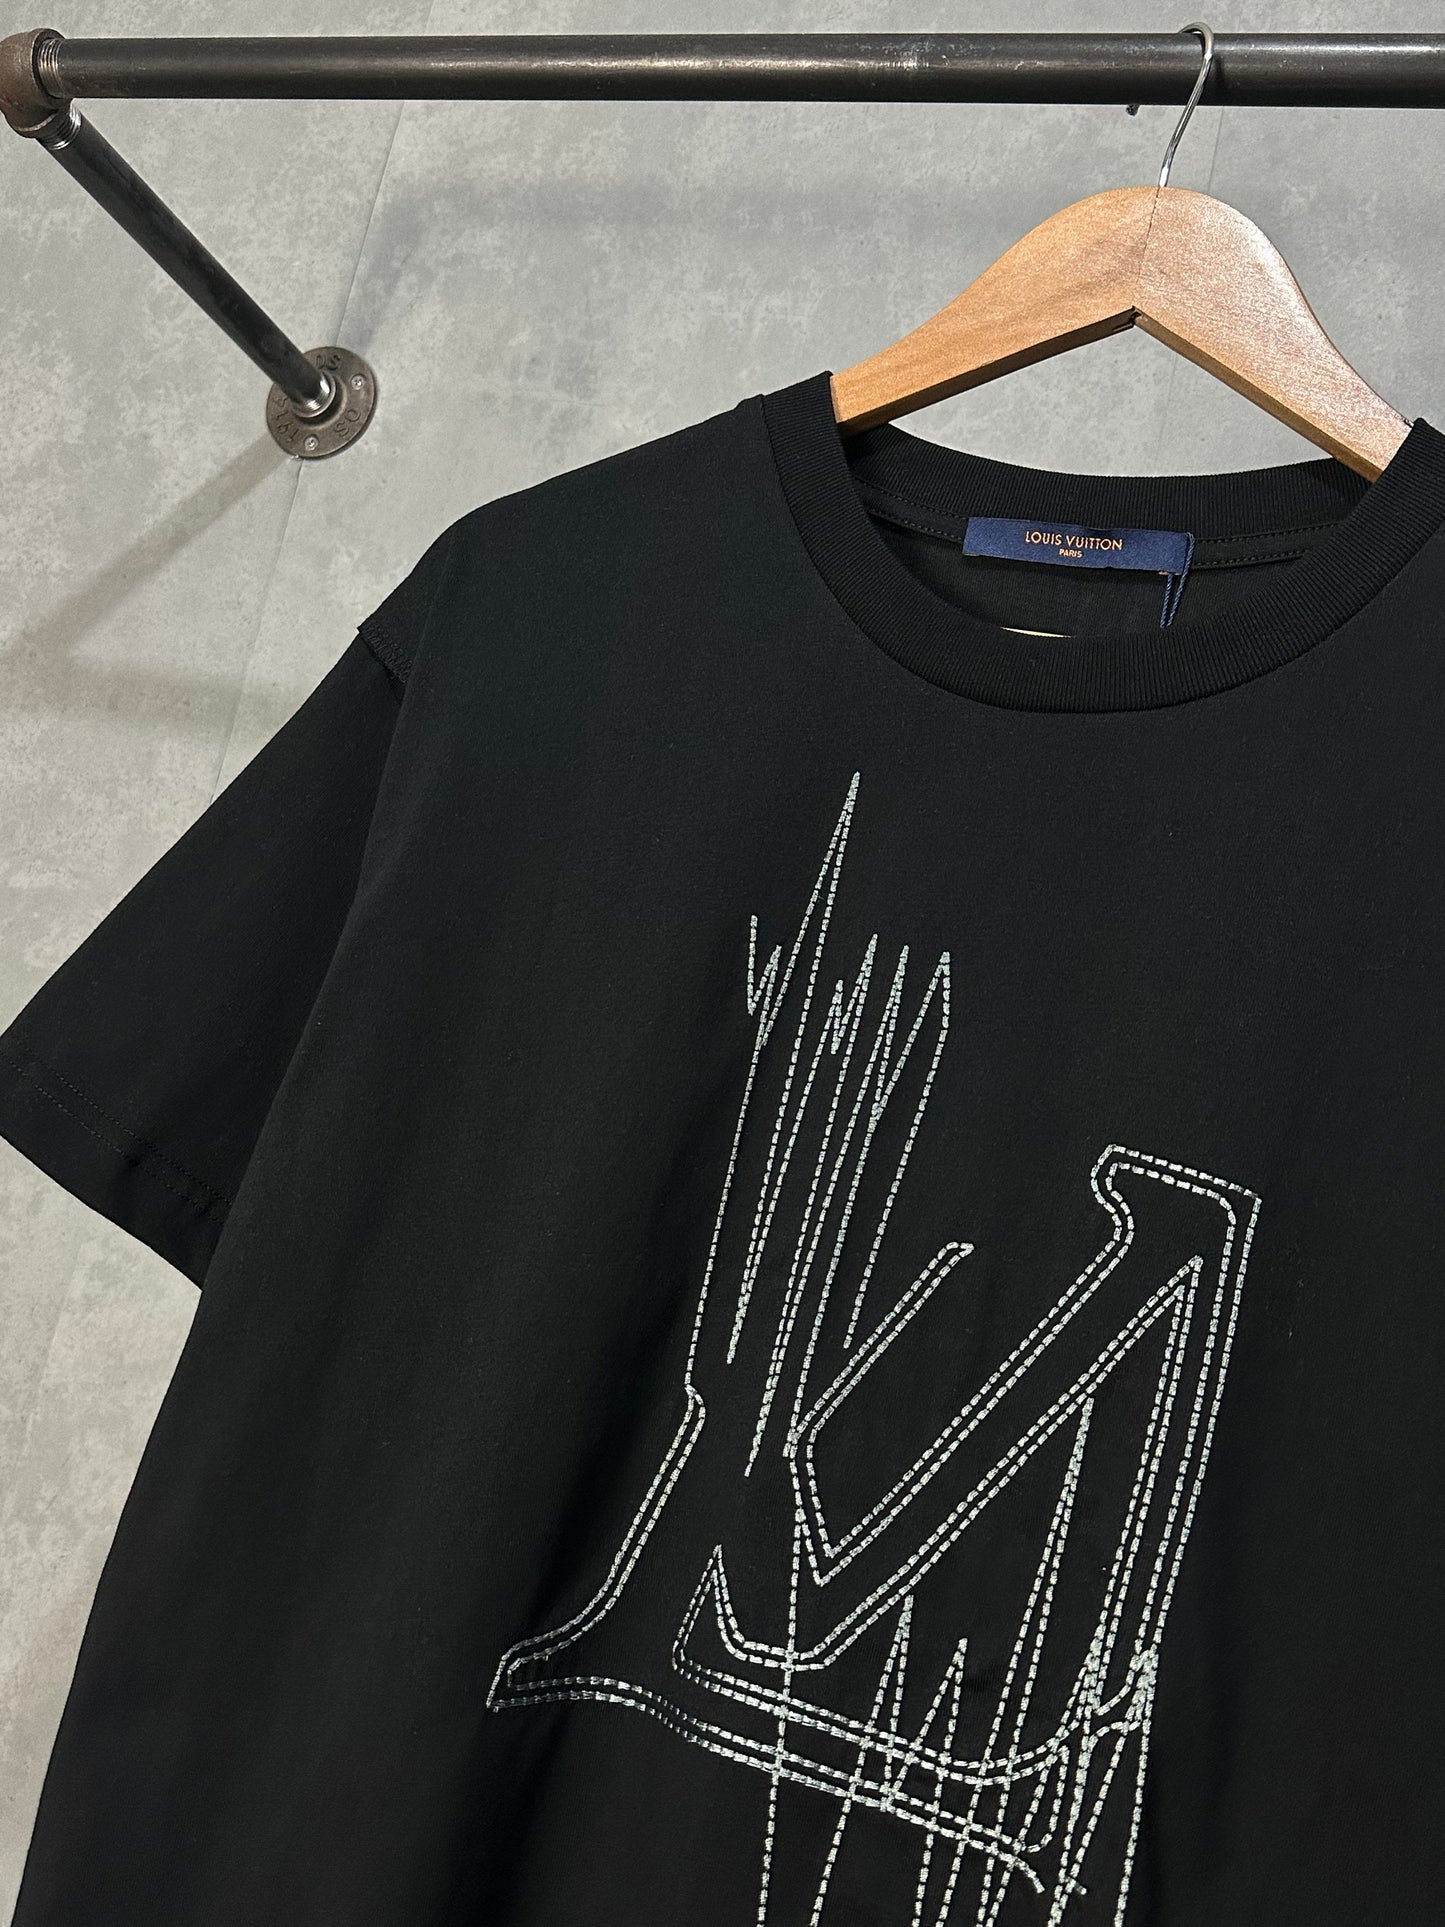 Louis Vuitton Gradient Monogram T-Shirt (Green) – Dad from MNL